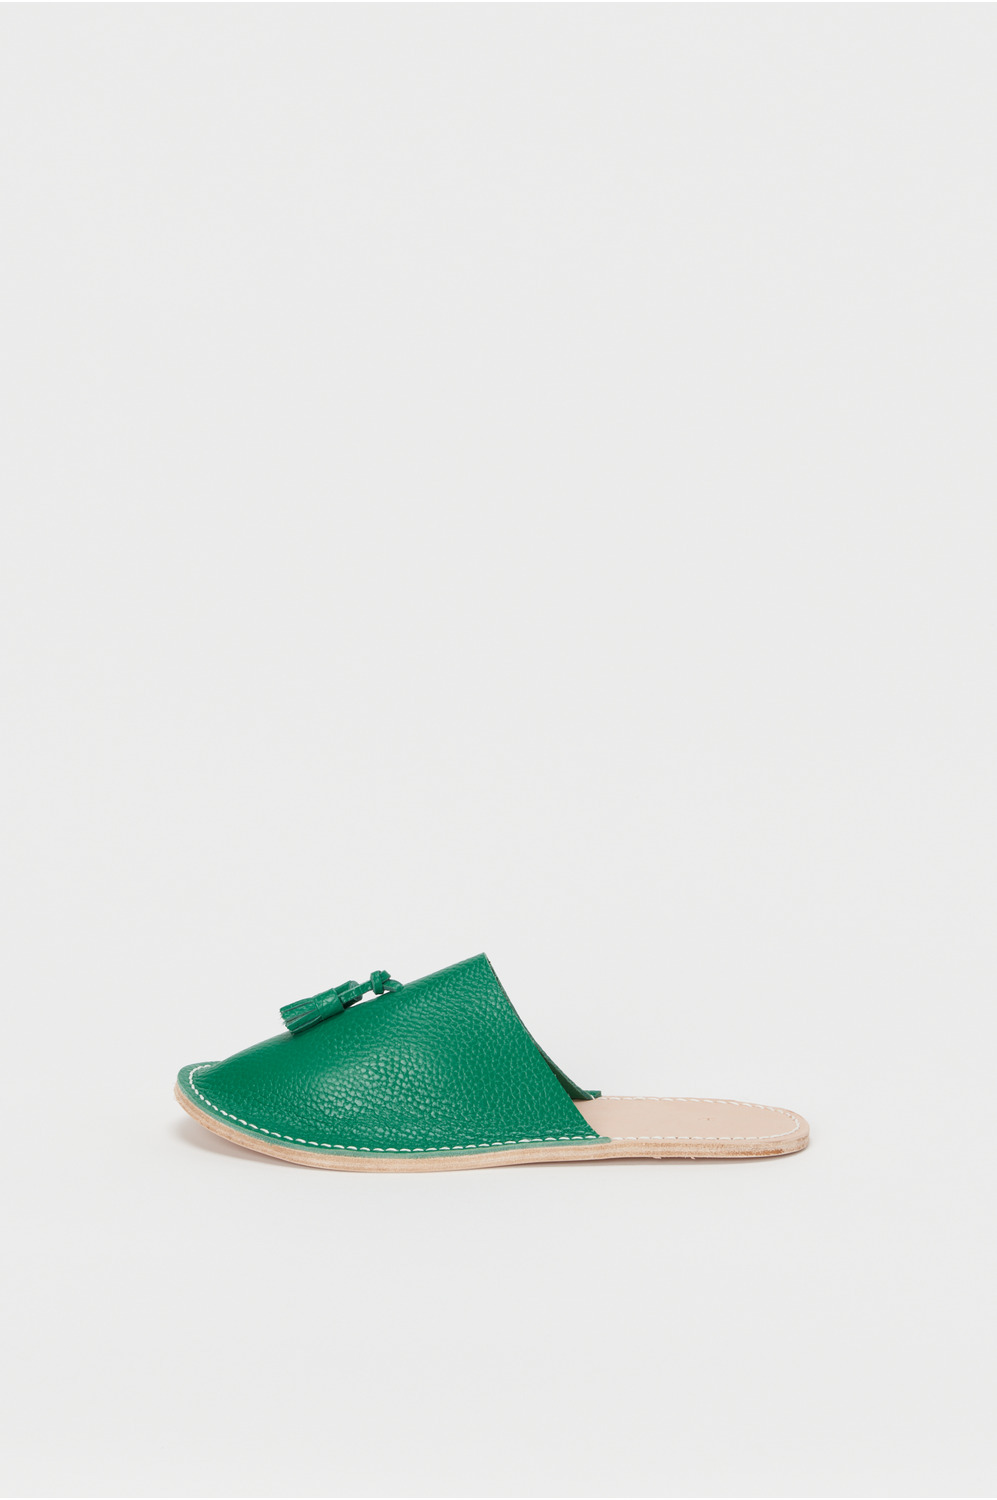 leather slipper 詳細画像 green 2